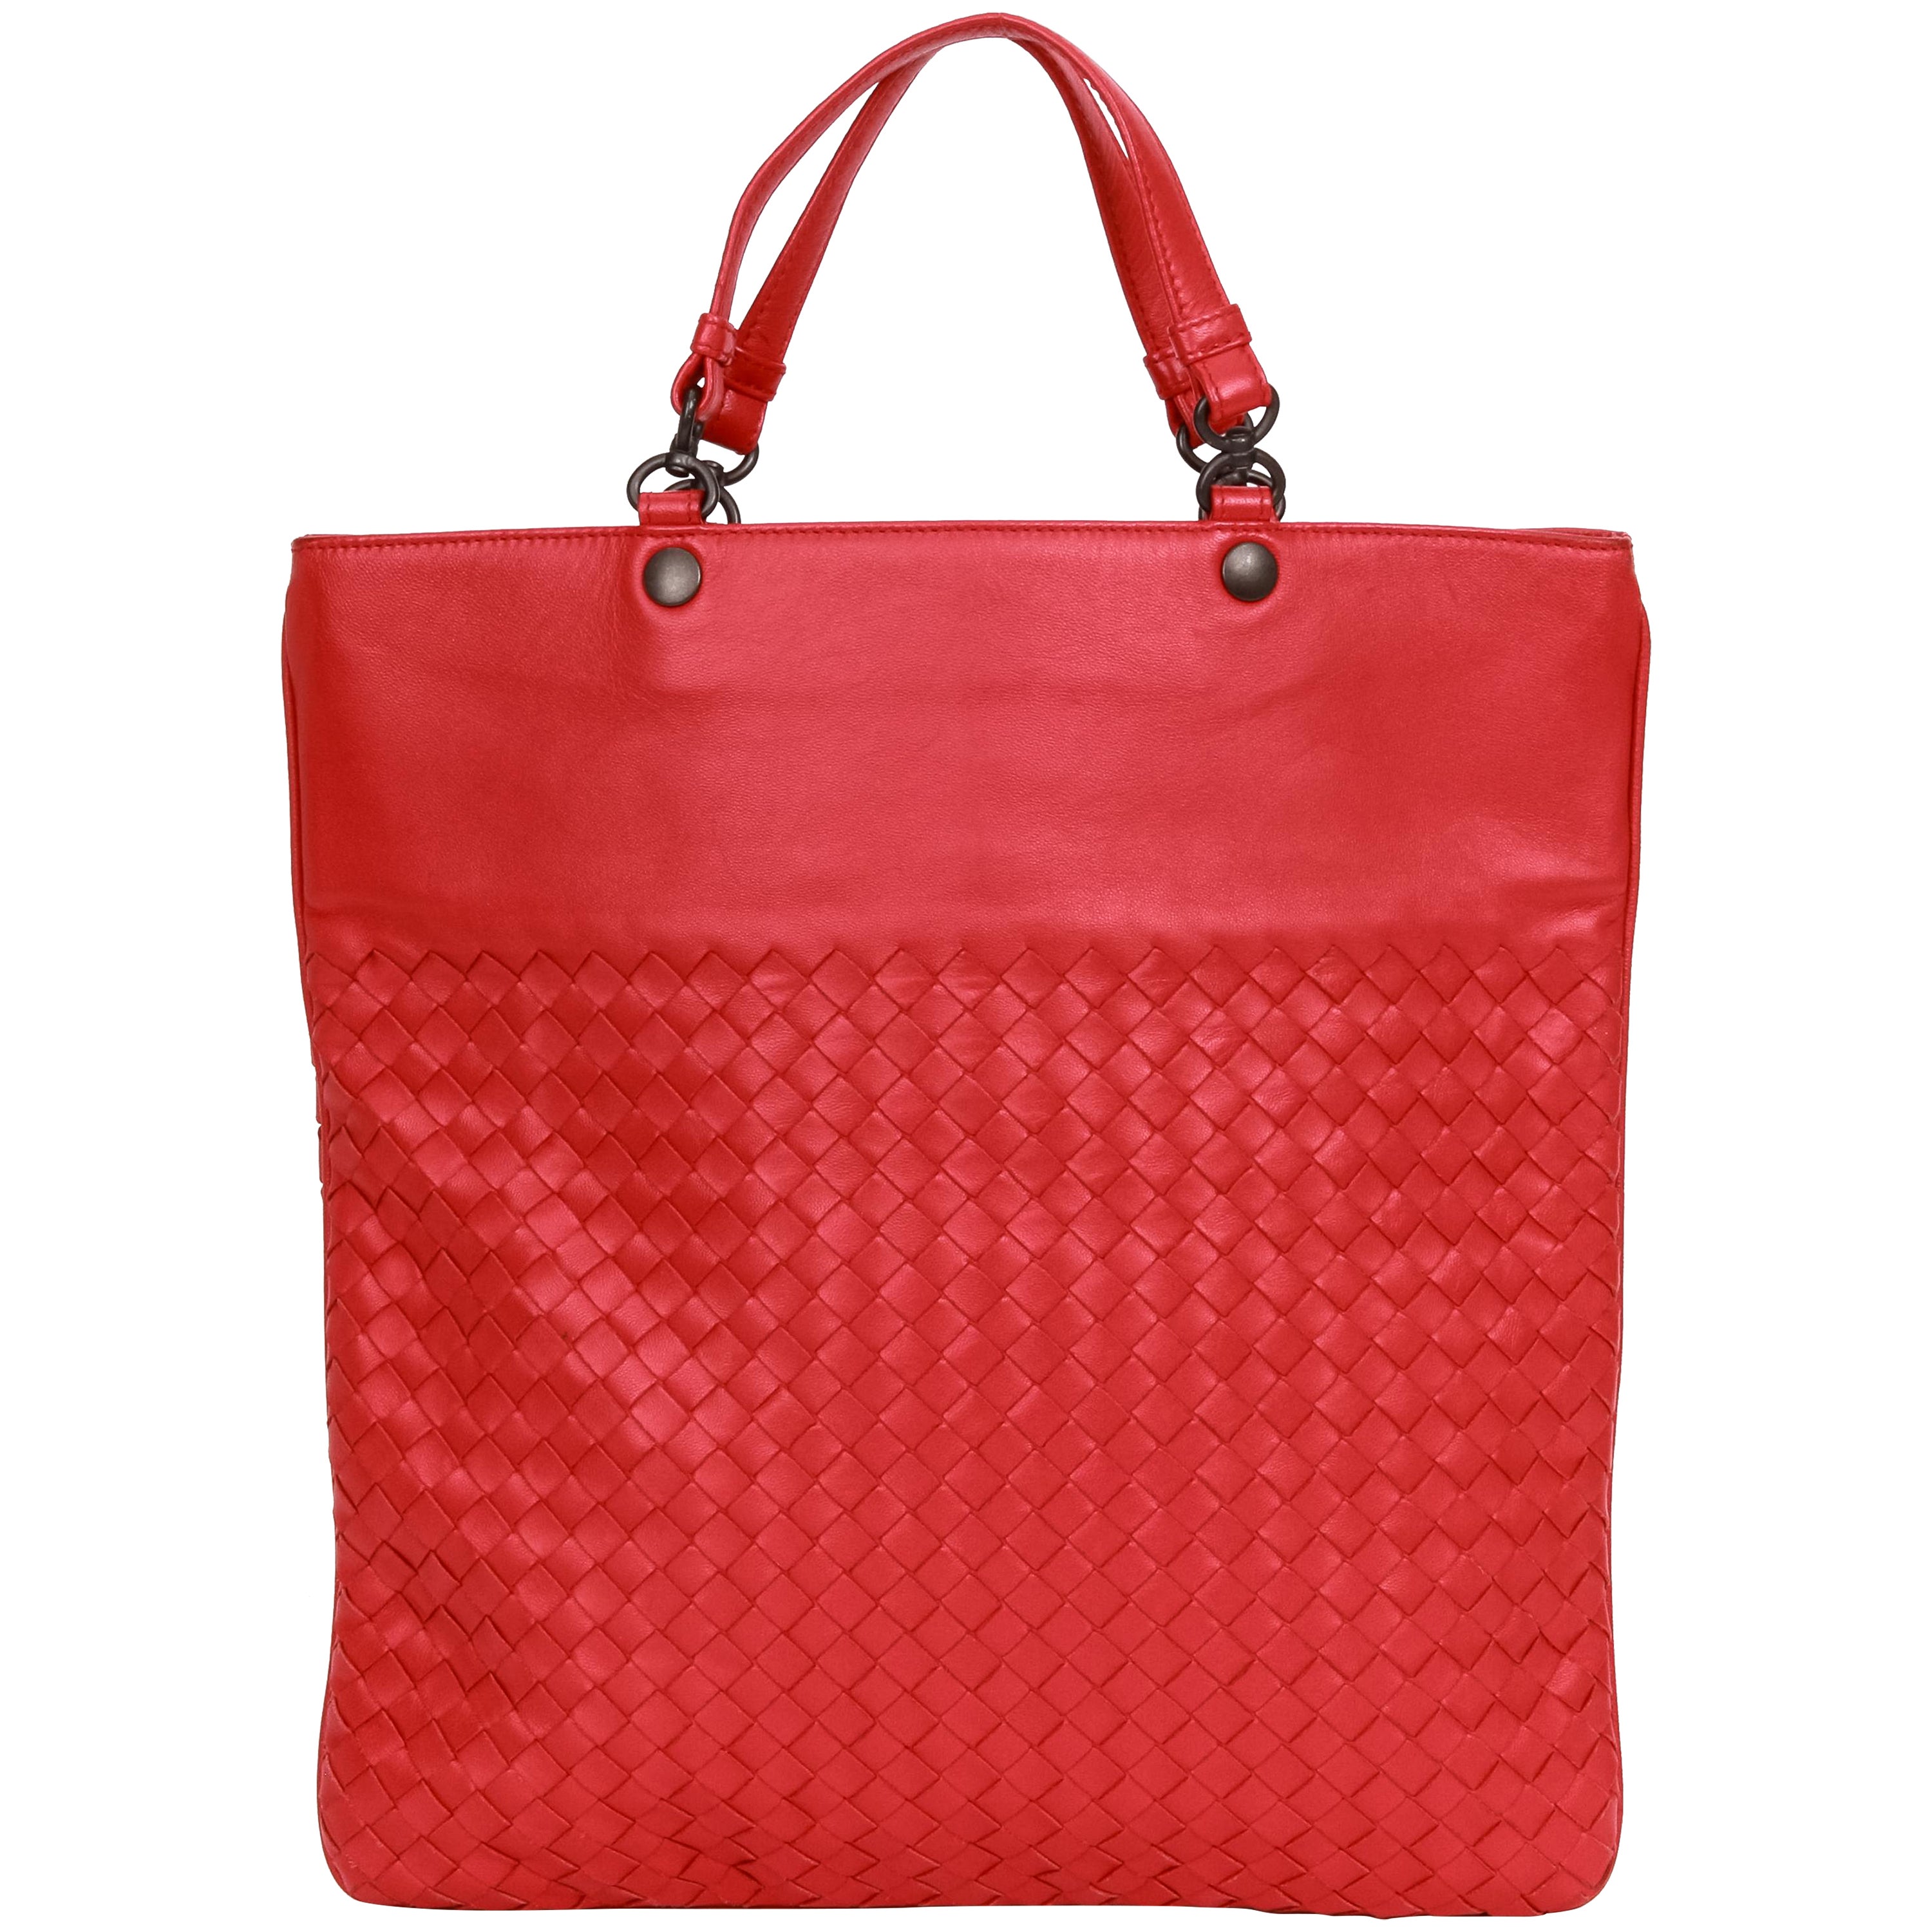 Bottega Veneta Intrecciato Red Lambskin Woven Leather Bag For Sale